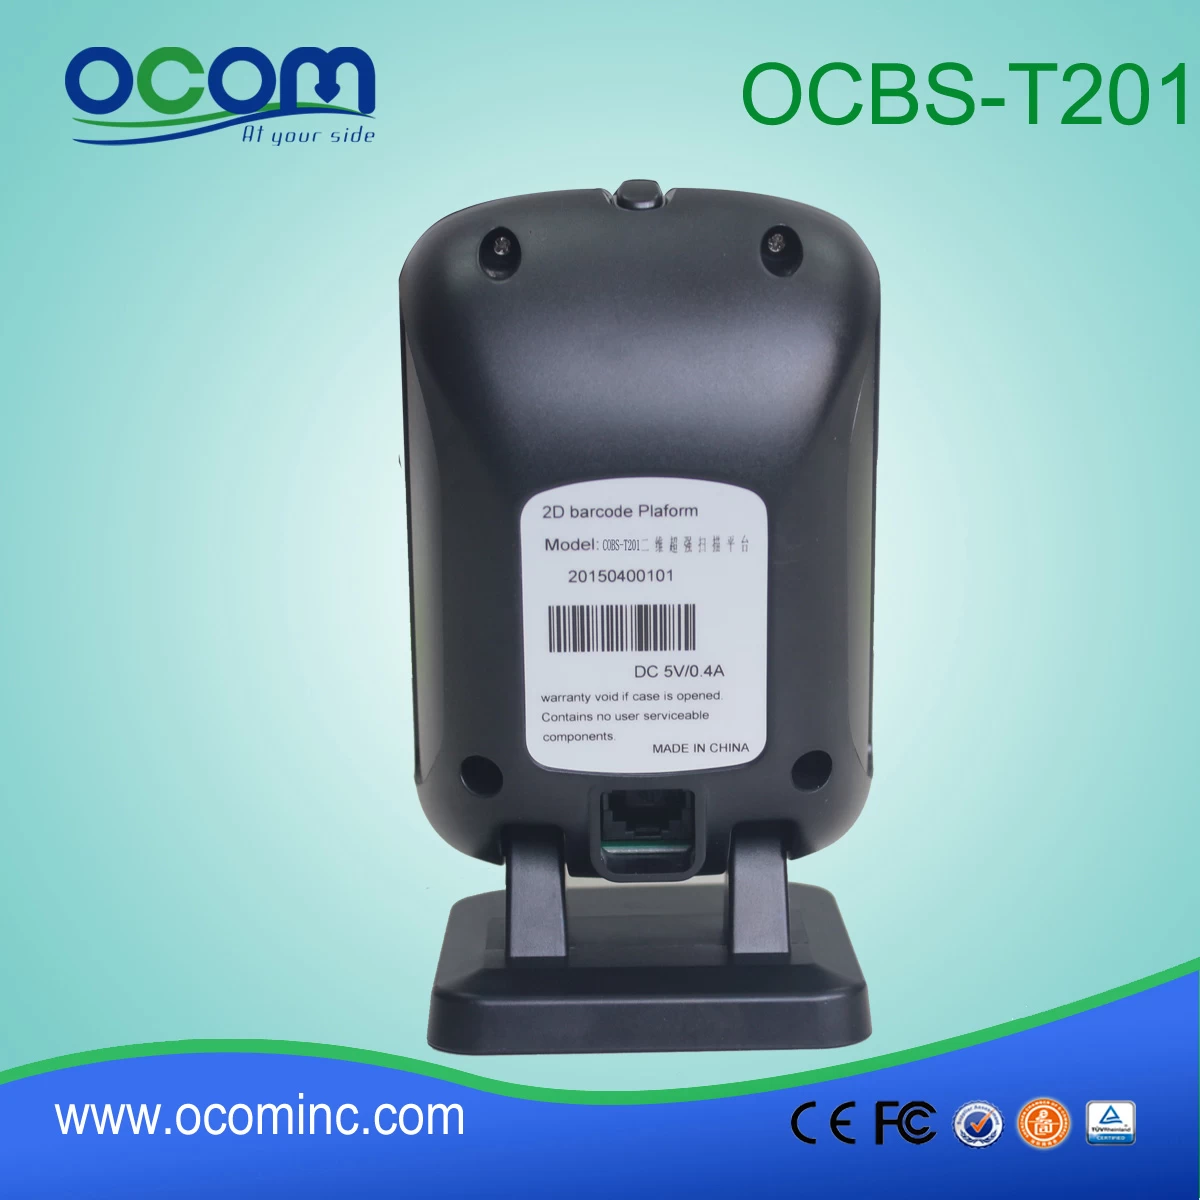 OCBS-T201:qr barcode scanner machine, fixed mount barcode scanner